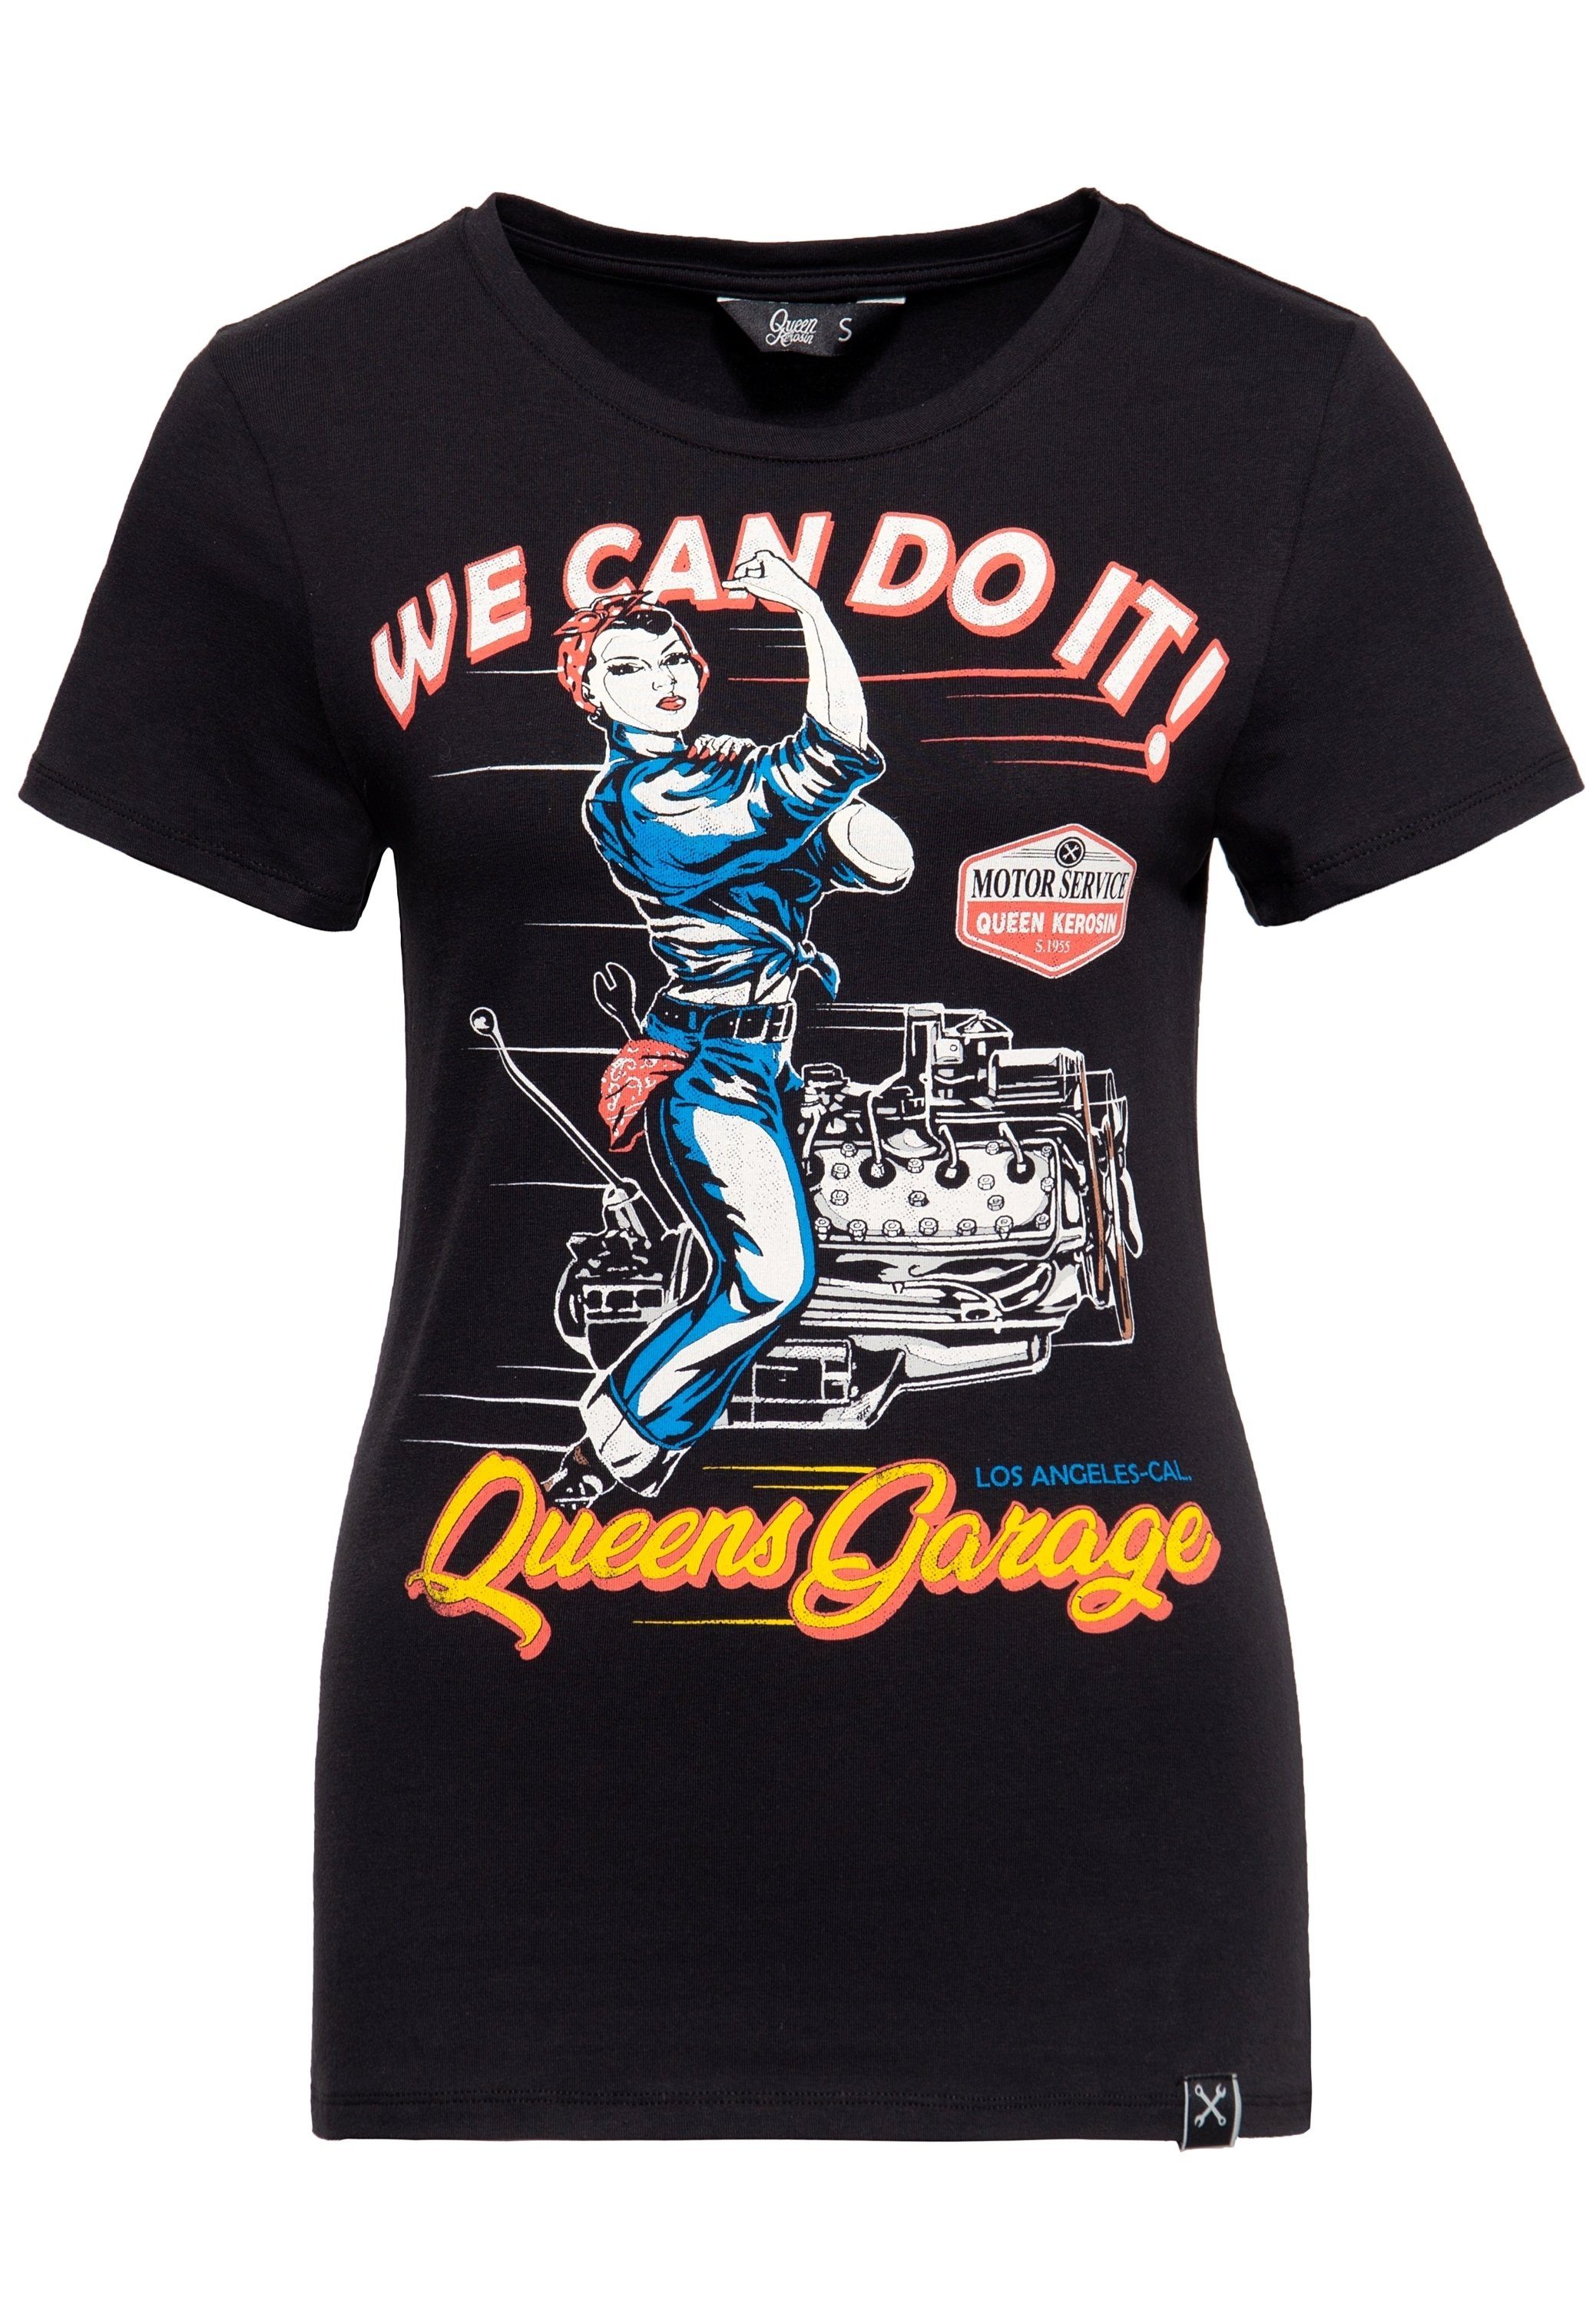 T-Shirt can We Vintage-Motiv mit QueenKerosin do it!